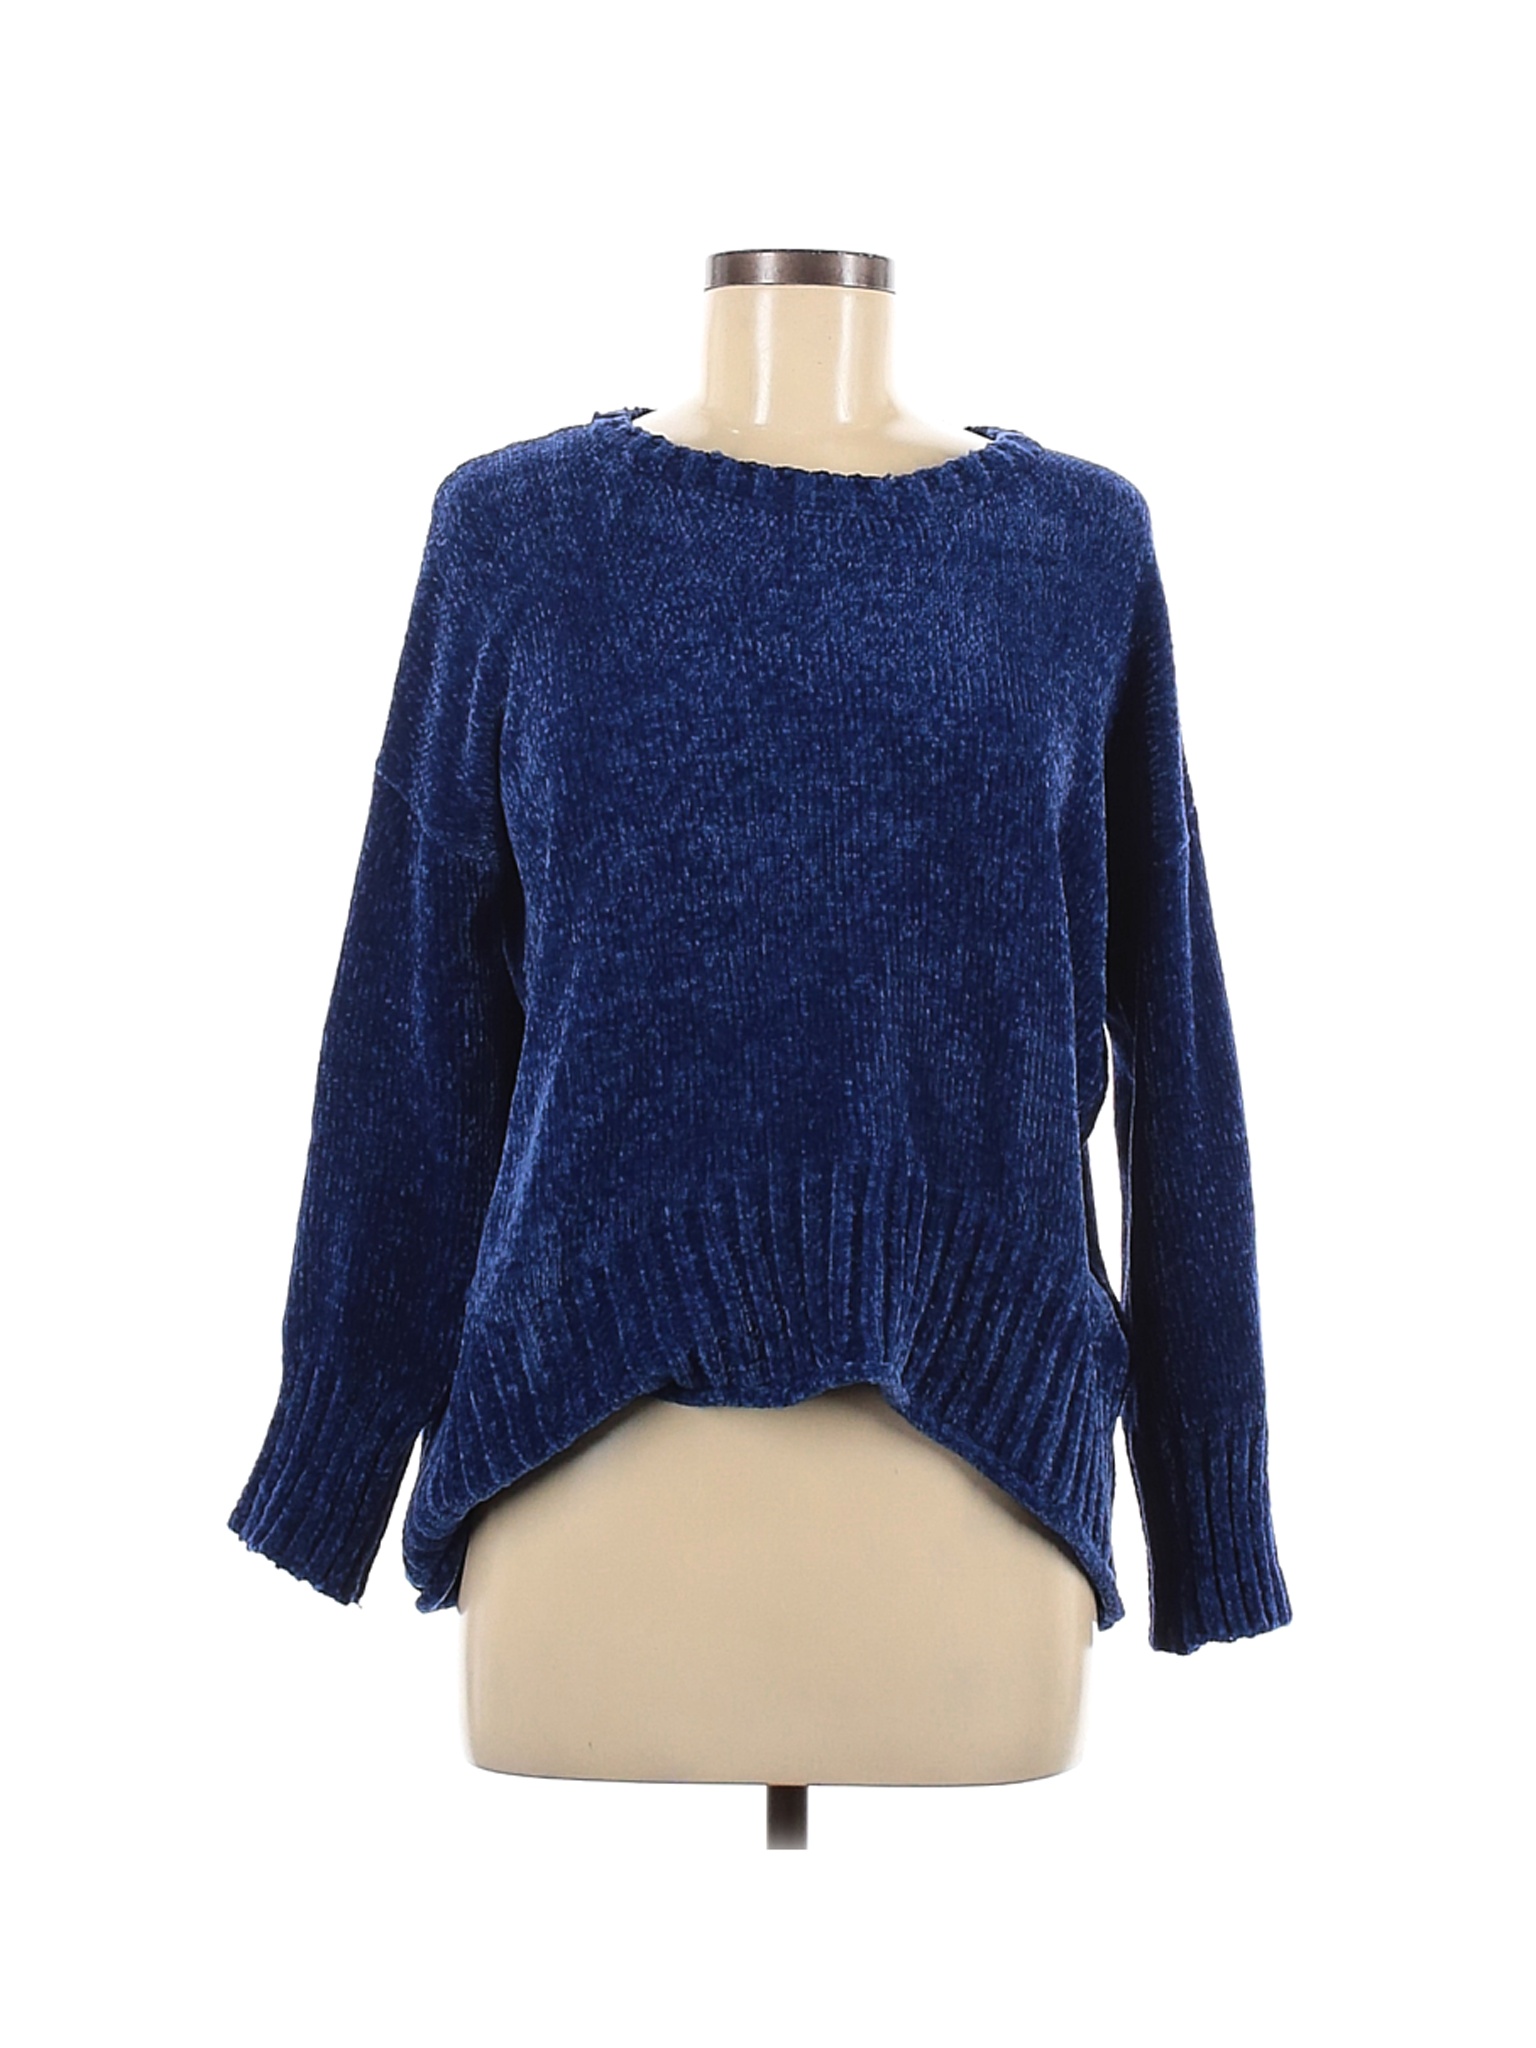 Assorted Brands Women Blue Pullover Sweater M | eBay